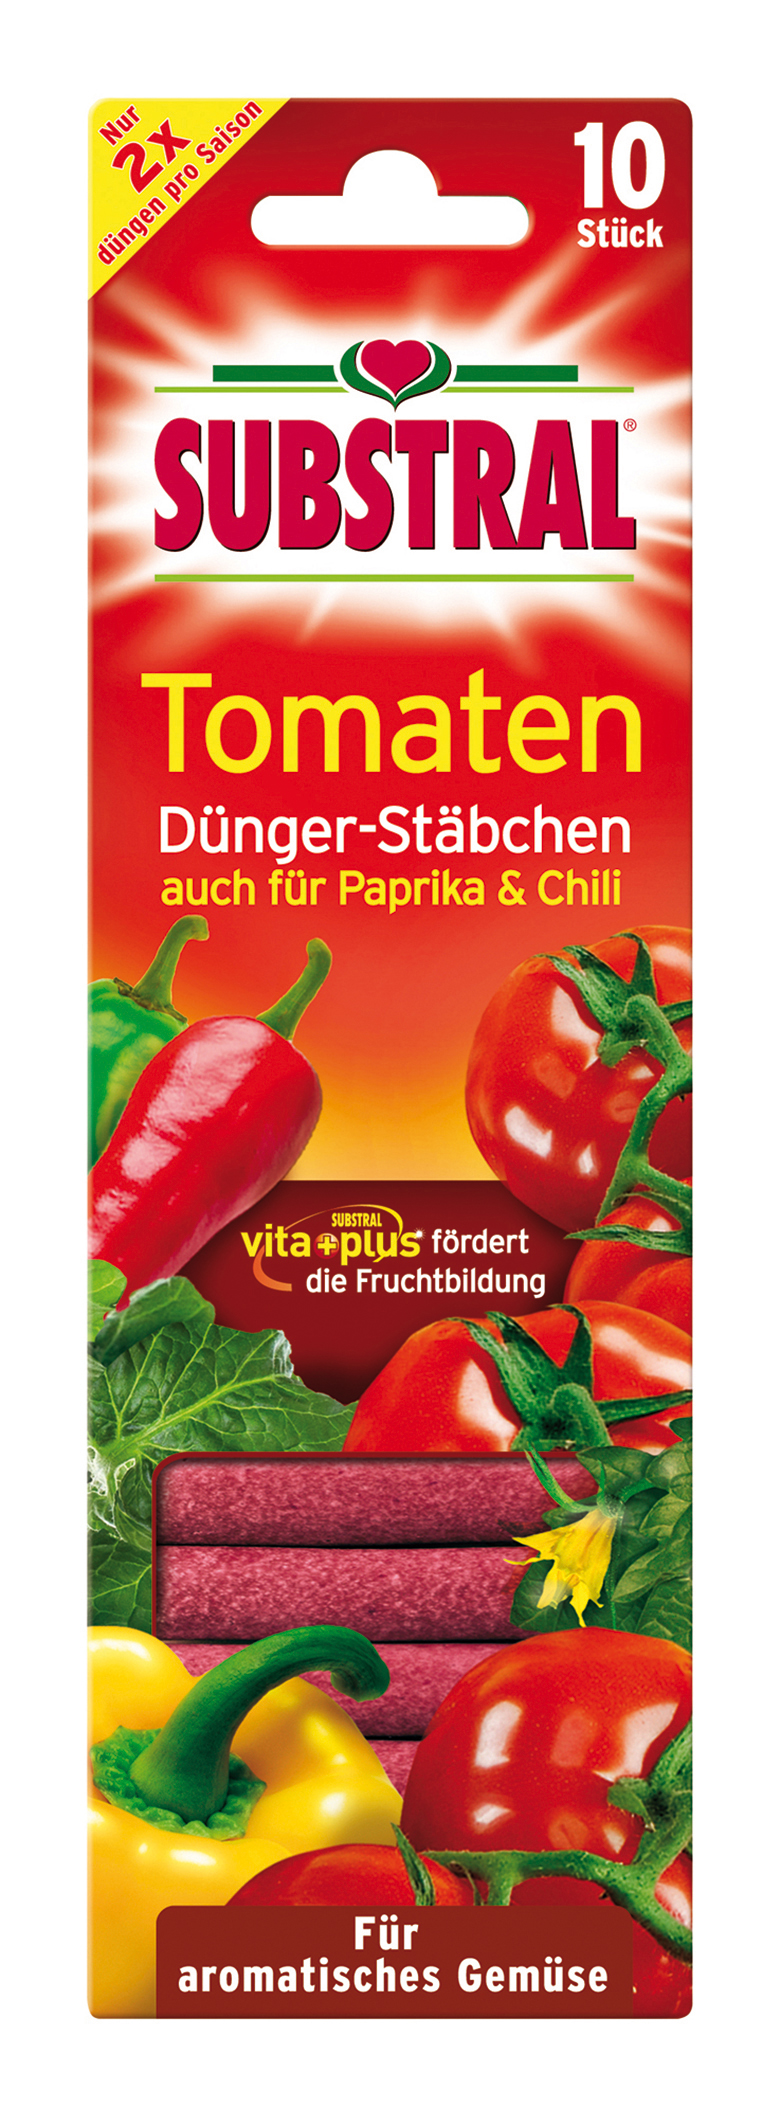 Substral Tomaten Dünger-Stäbchen 10 Stück